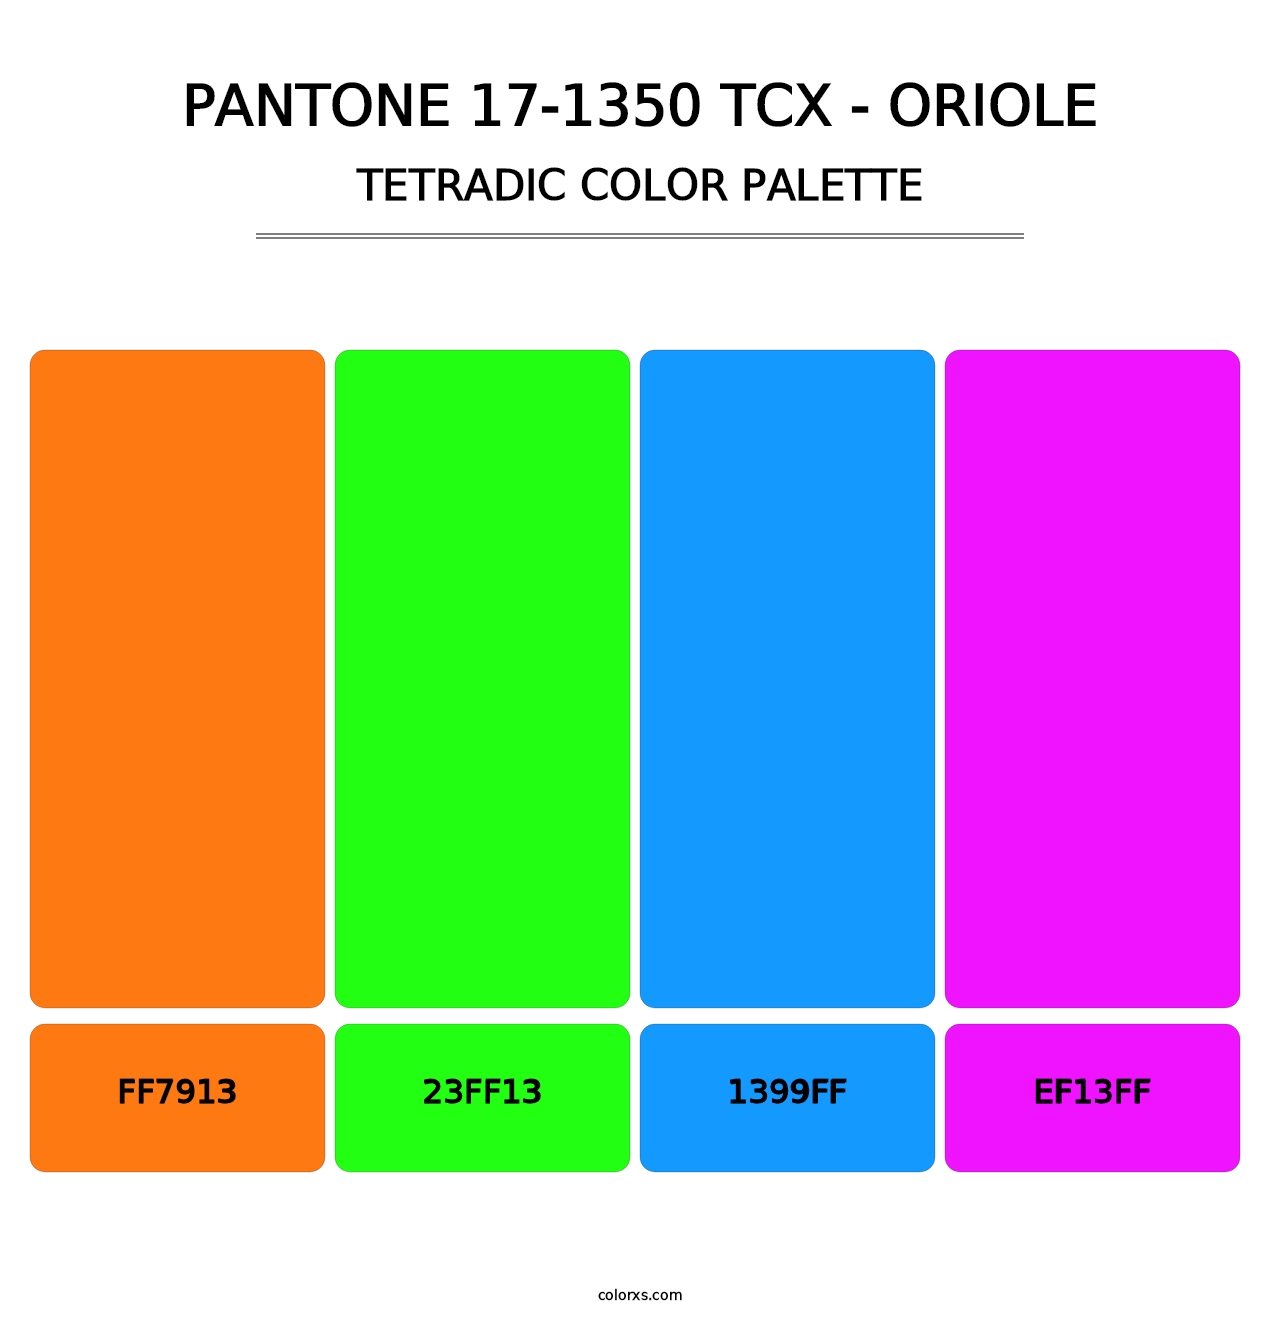 PANTONE 17-1350 TCX - Oriole - Tetradic Color Palette